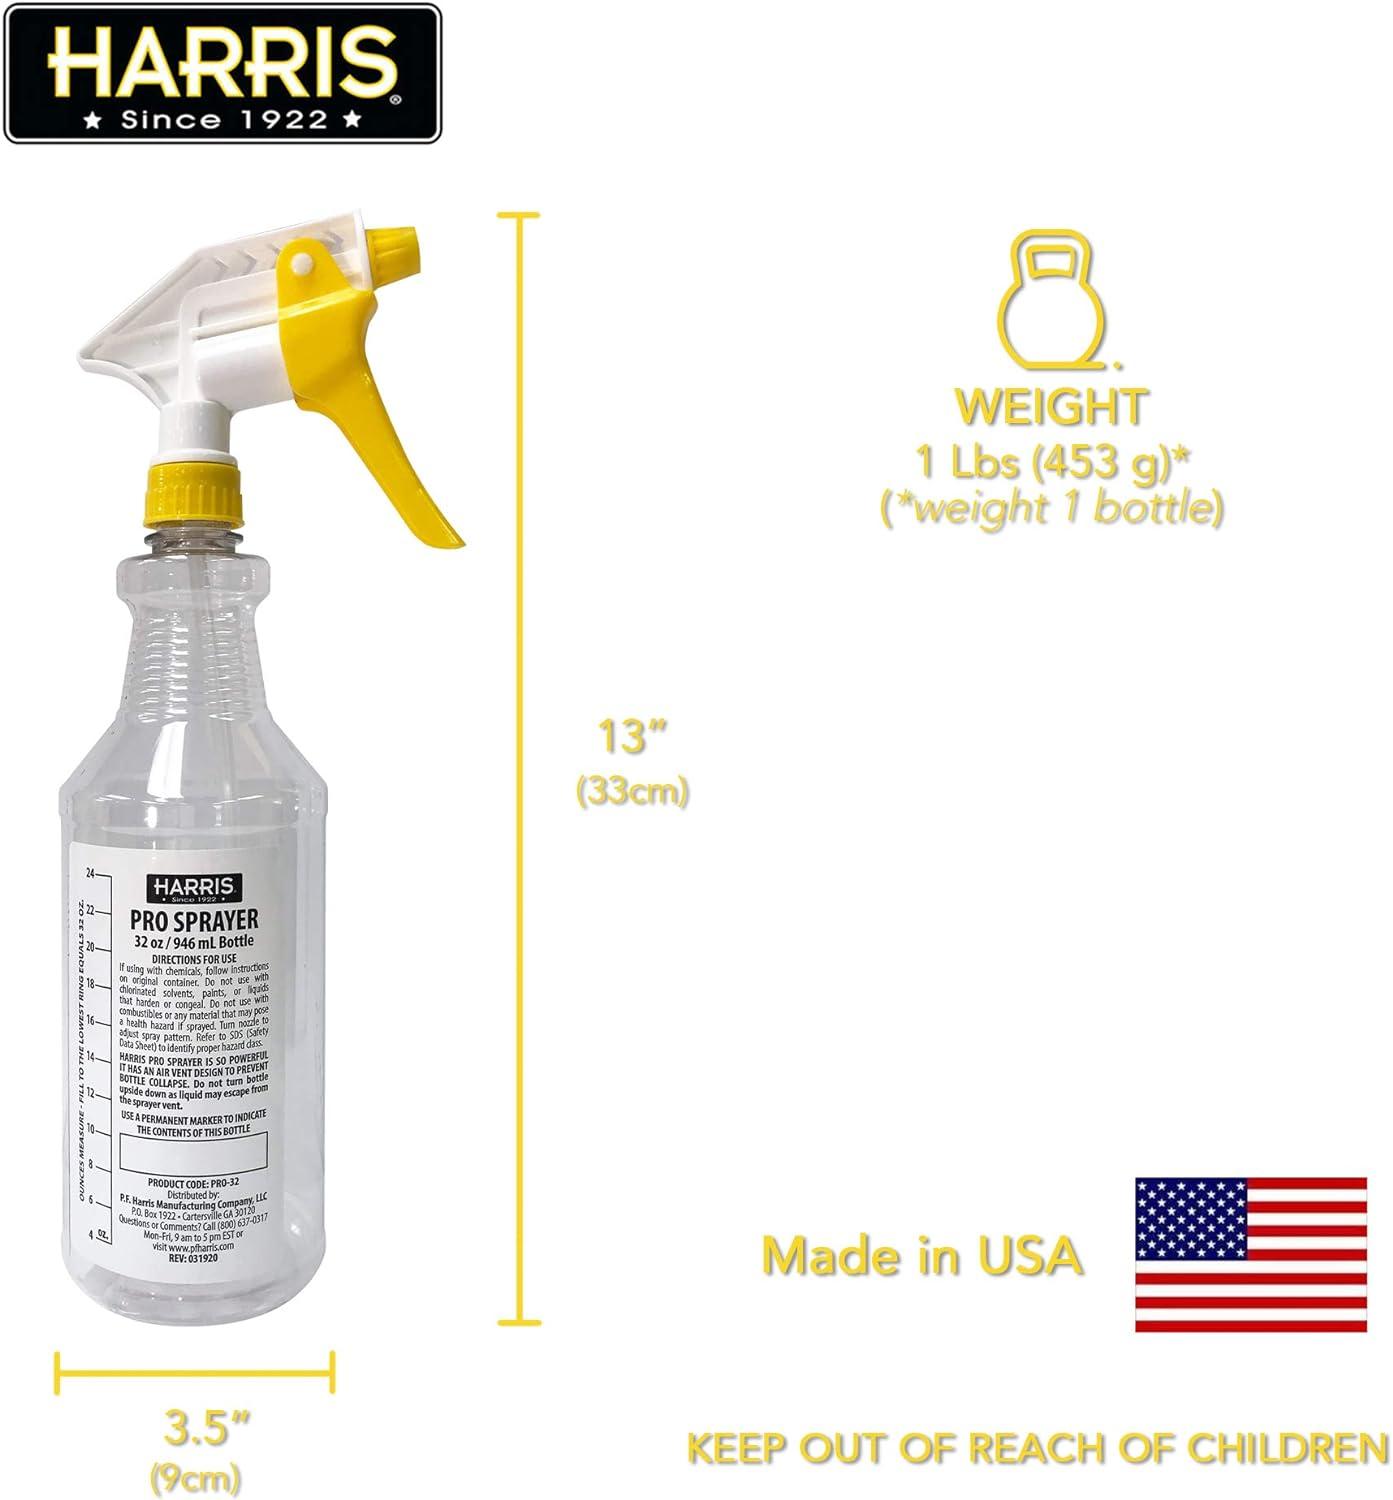 Harris Chemically Resistant Professional Spray Bottles, 32oz 3